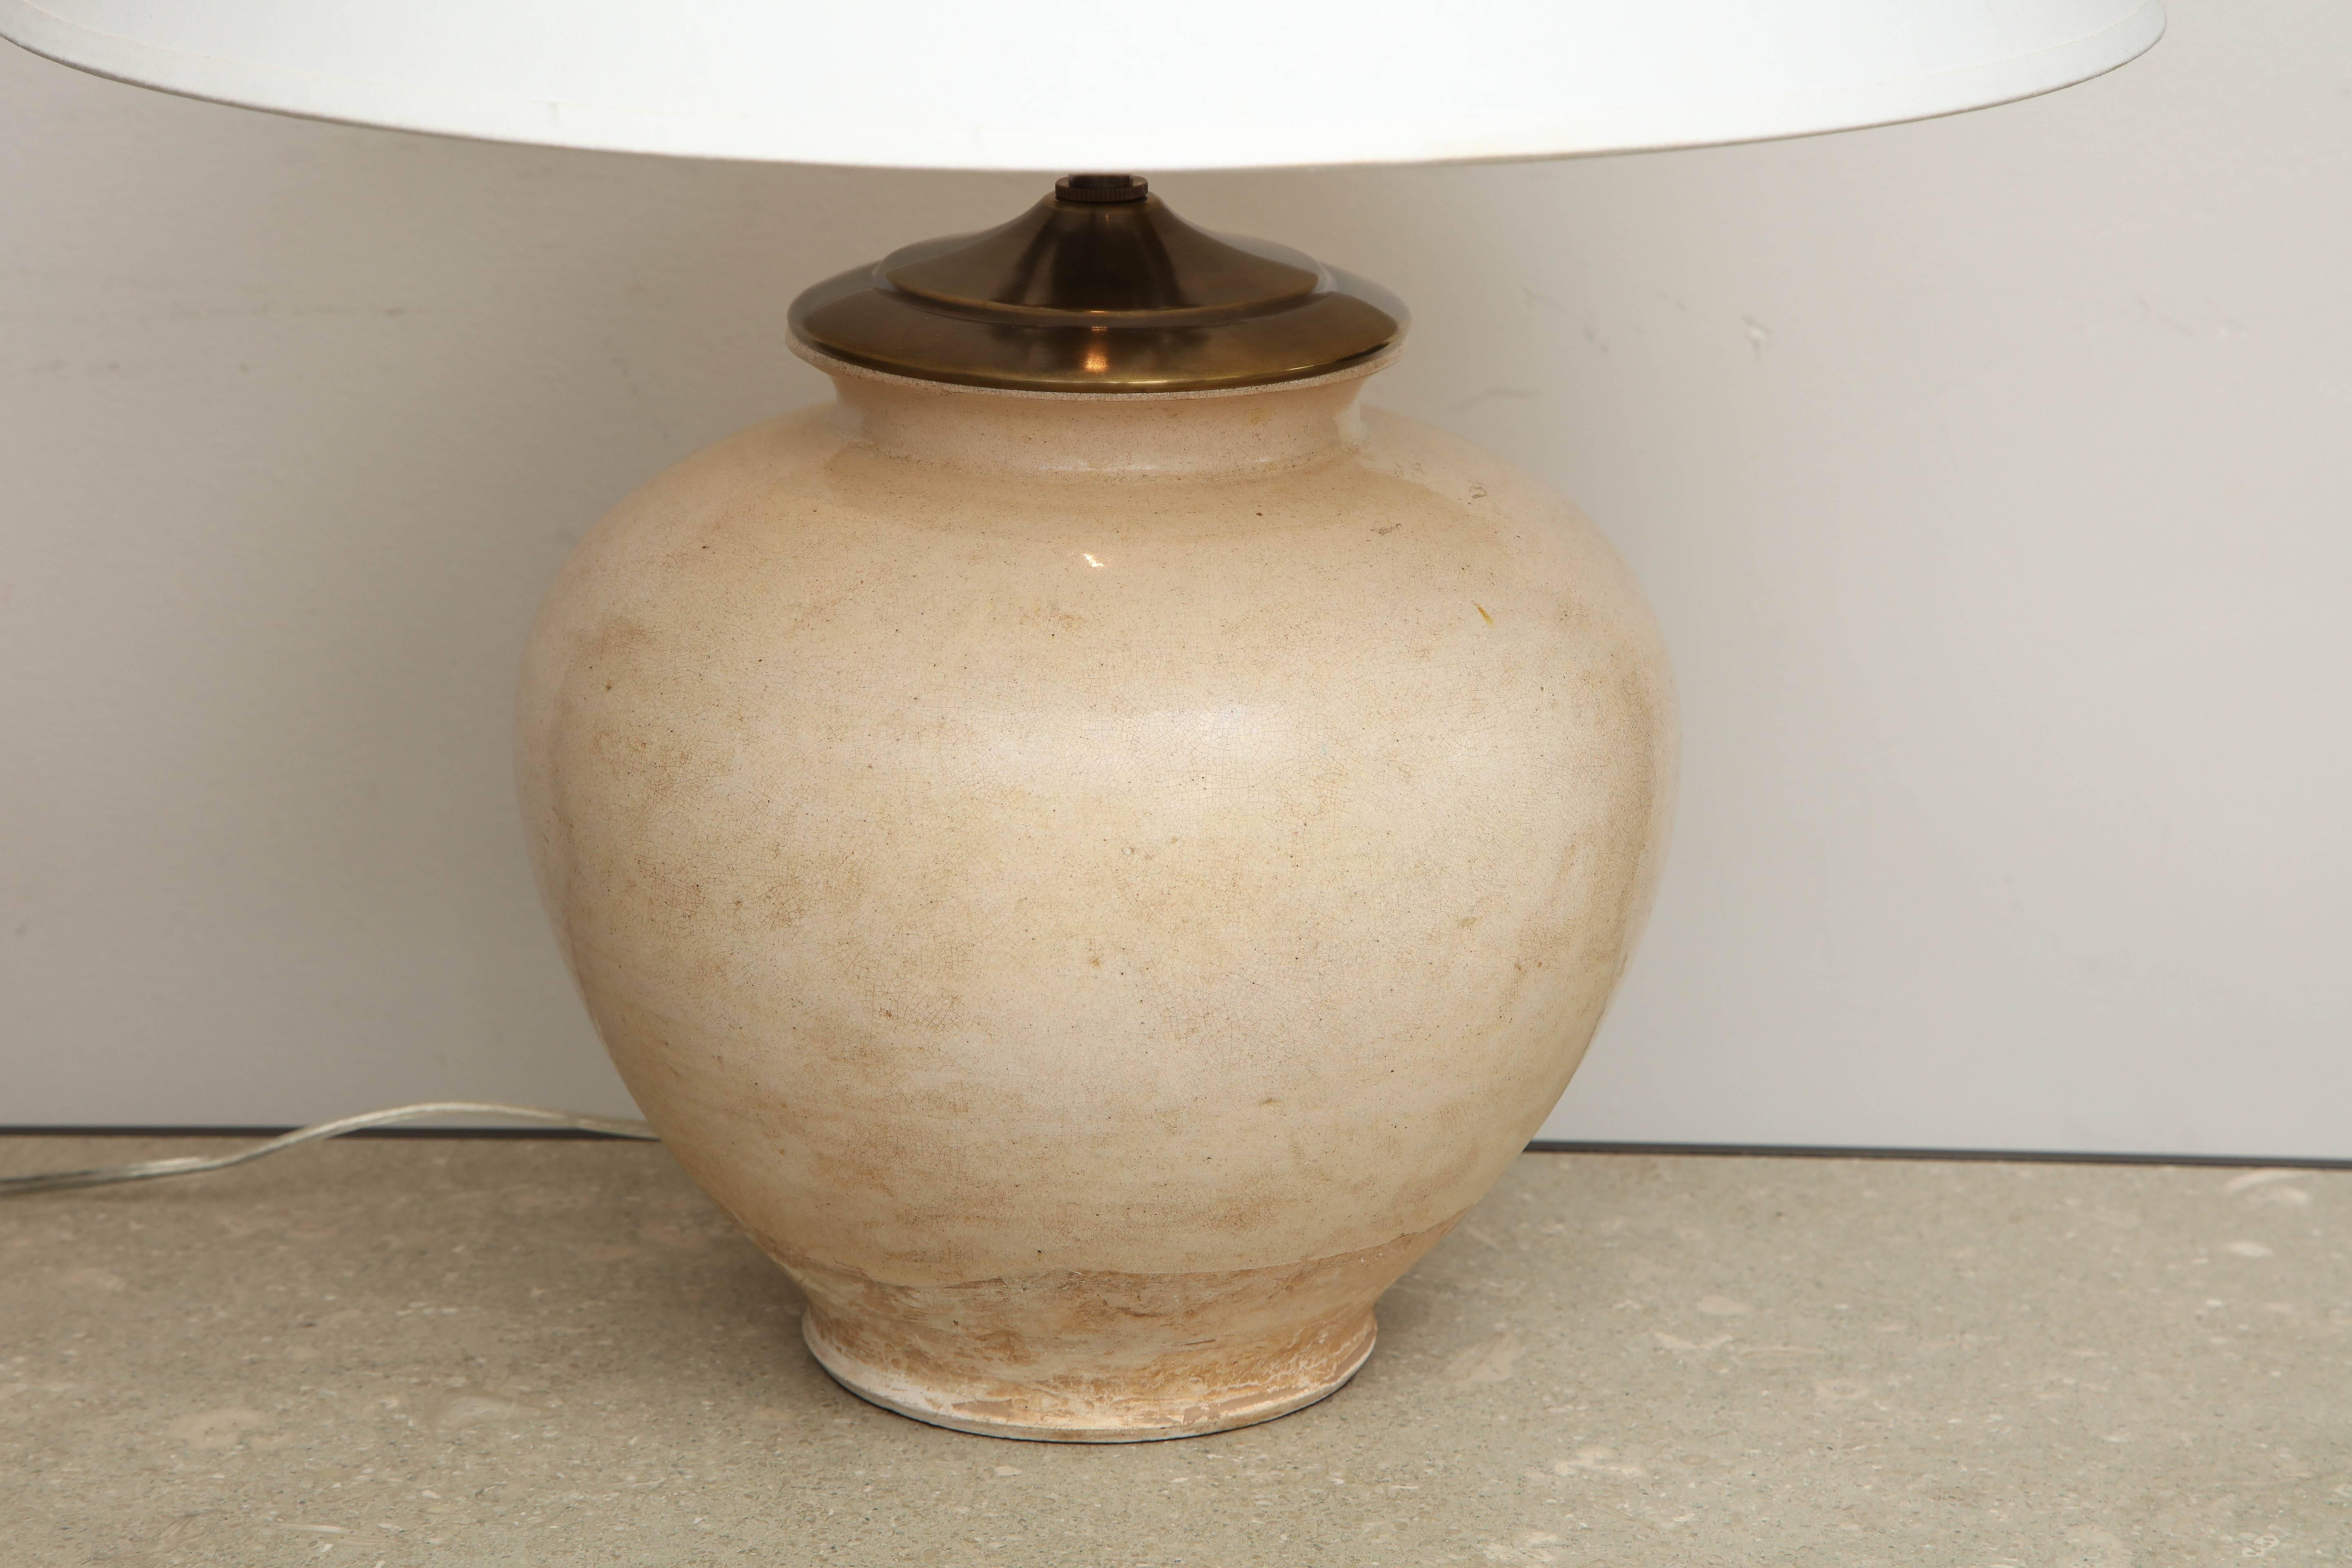 Late 19th century terracotta wine vessel lamp, white glaze,
Chinese.